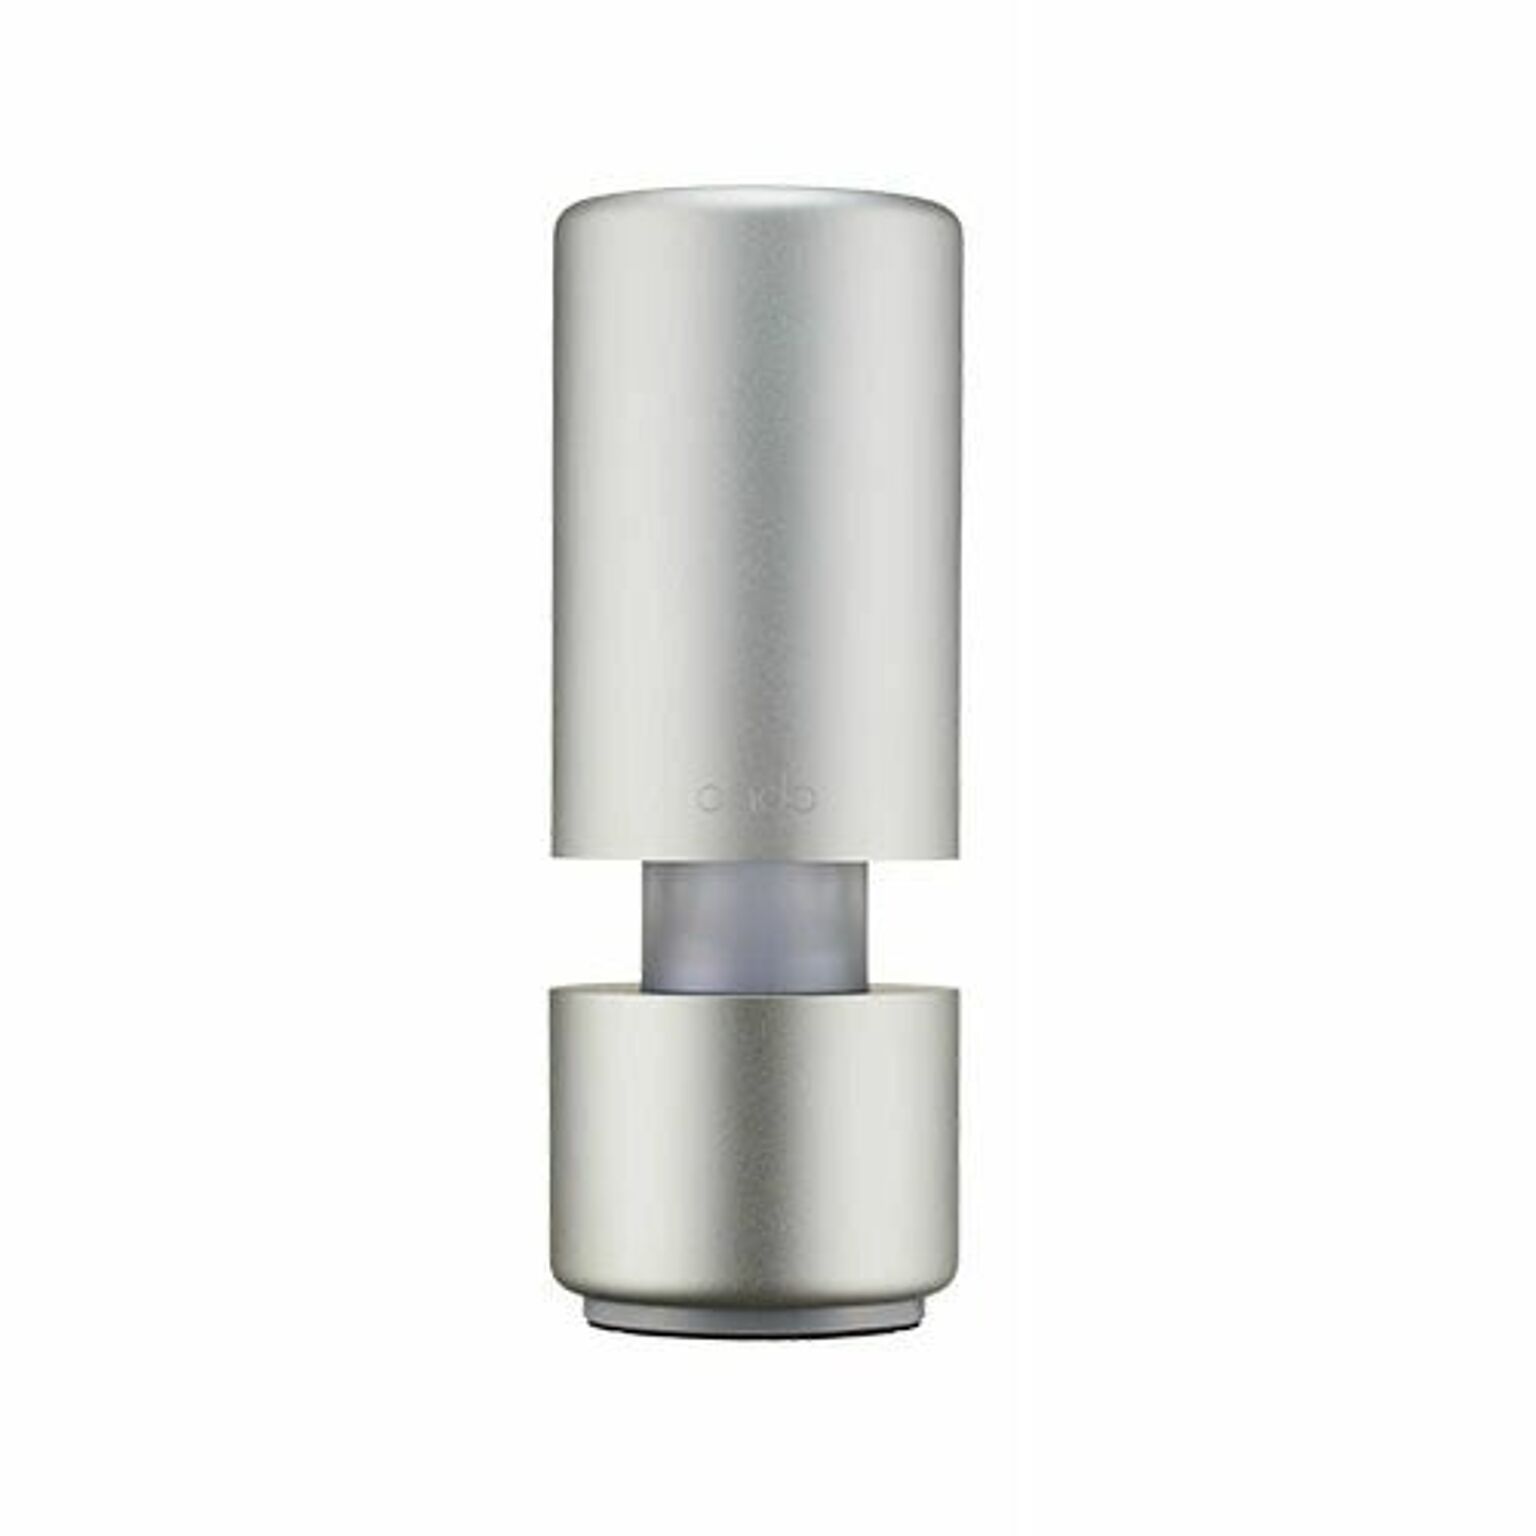 Air Purifier LEAF-Portable MP-C30 ポータブル空気清浄機/車載・小スペースタイプ/モバイル/USB電源/LED